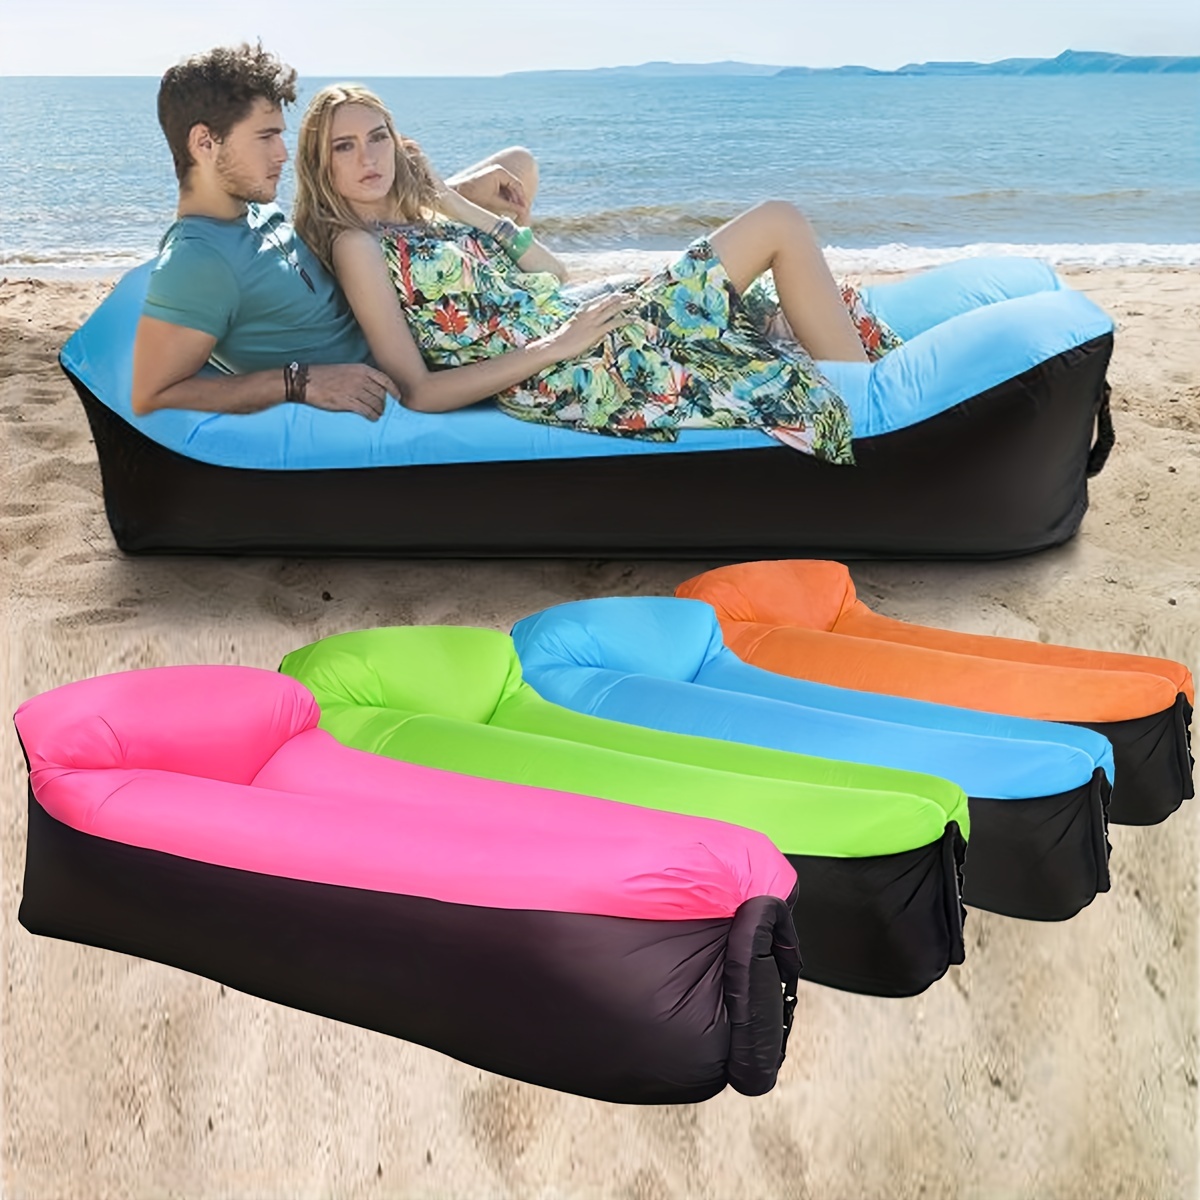 Silla inflable rosa sofá de aire transparente sofá inflable para playa,  oficina, viajes, camping, picnic, piscina